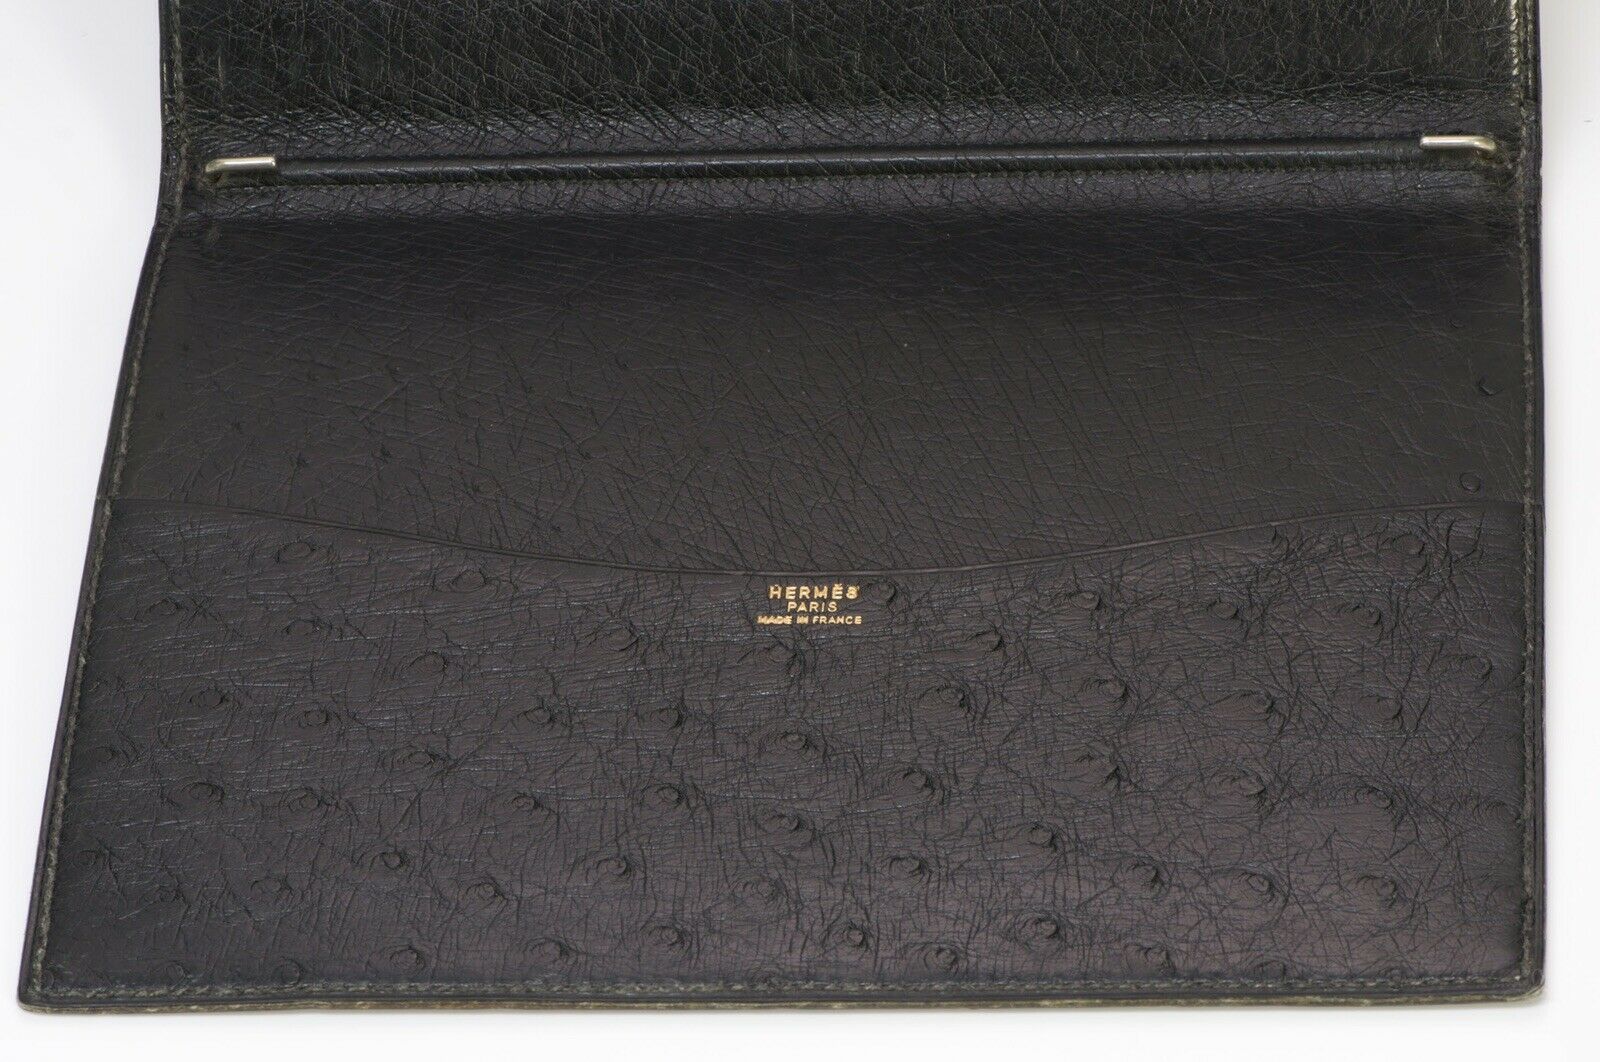 HERMES Paris 1985 Black Ostrich Large Agenda Notebook Cover